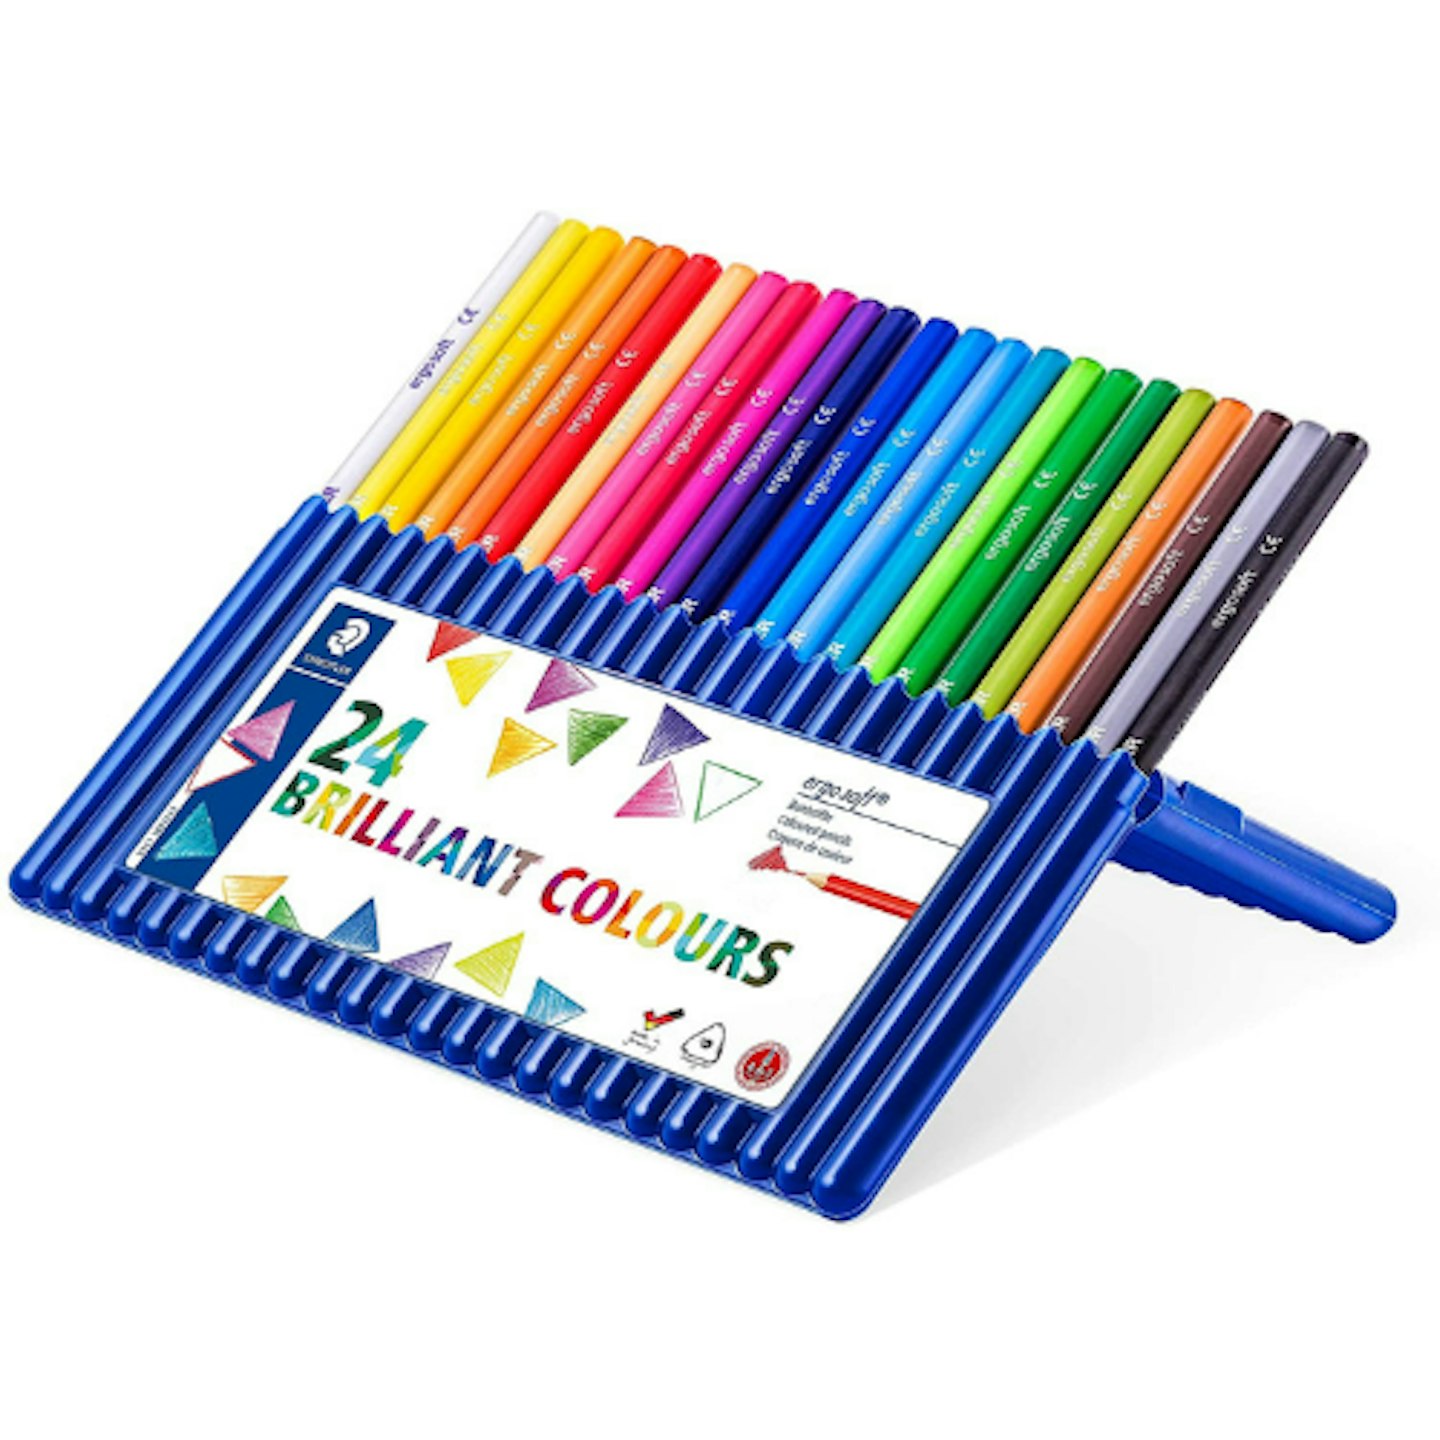 STAEDTLER Ergosoft Triangular Colouring Pencils (Pack of 24)